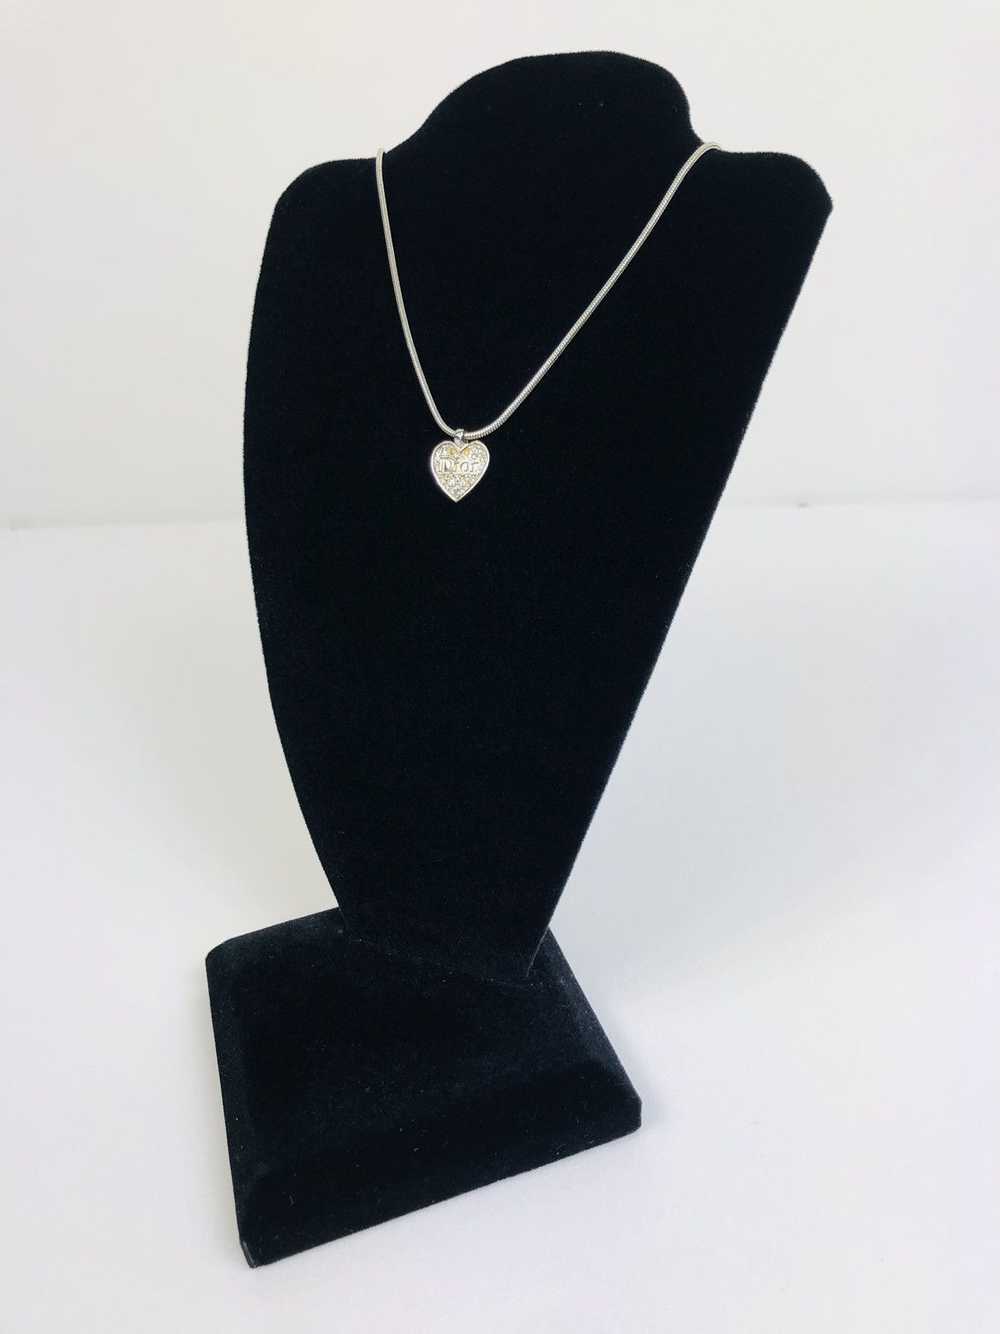 Dior Dior encrusted heart necklace - image 1